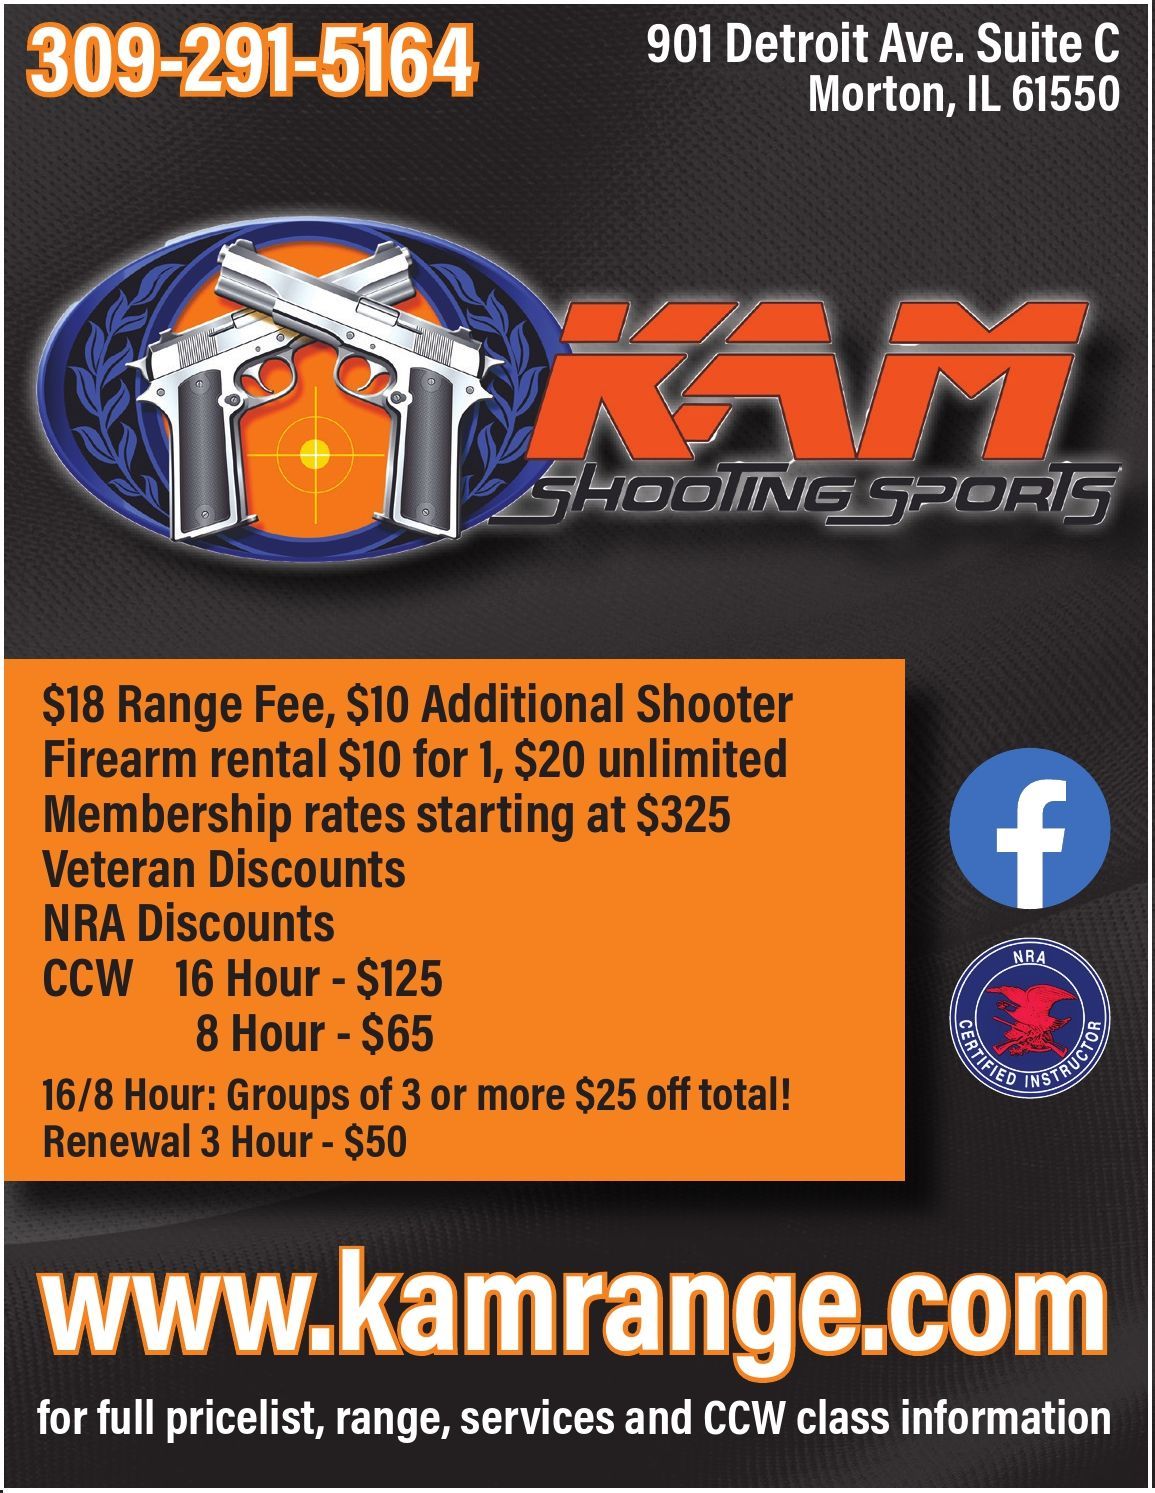 KAM Shooting Sports indoor gun firearm range Morton, IL